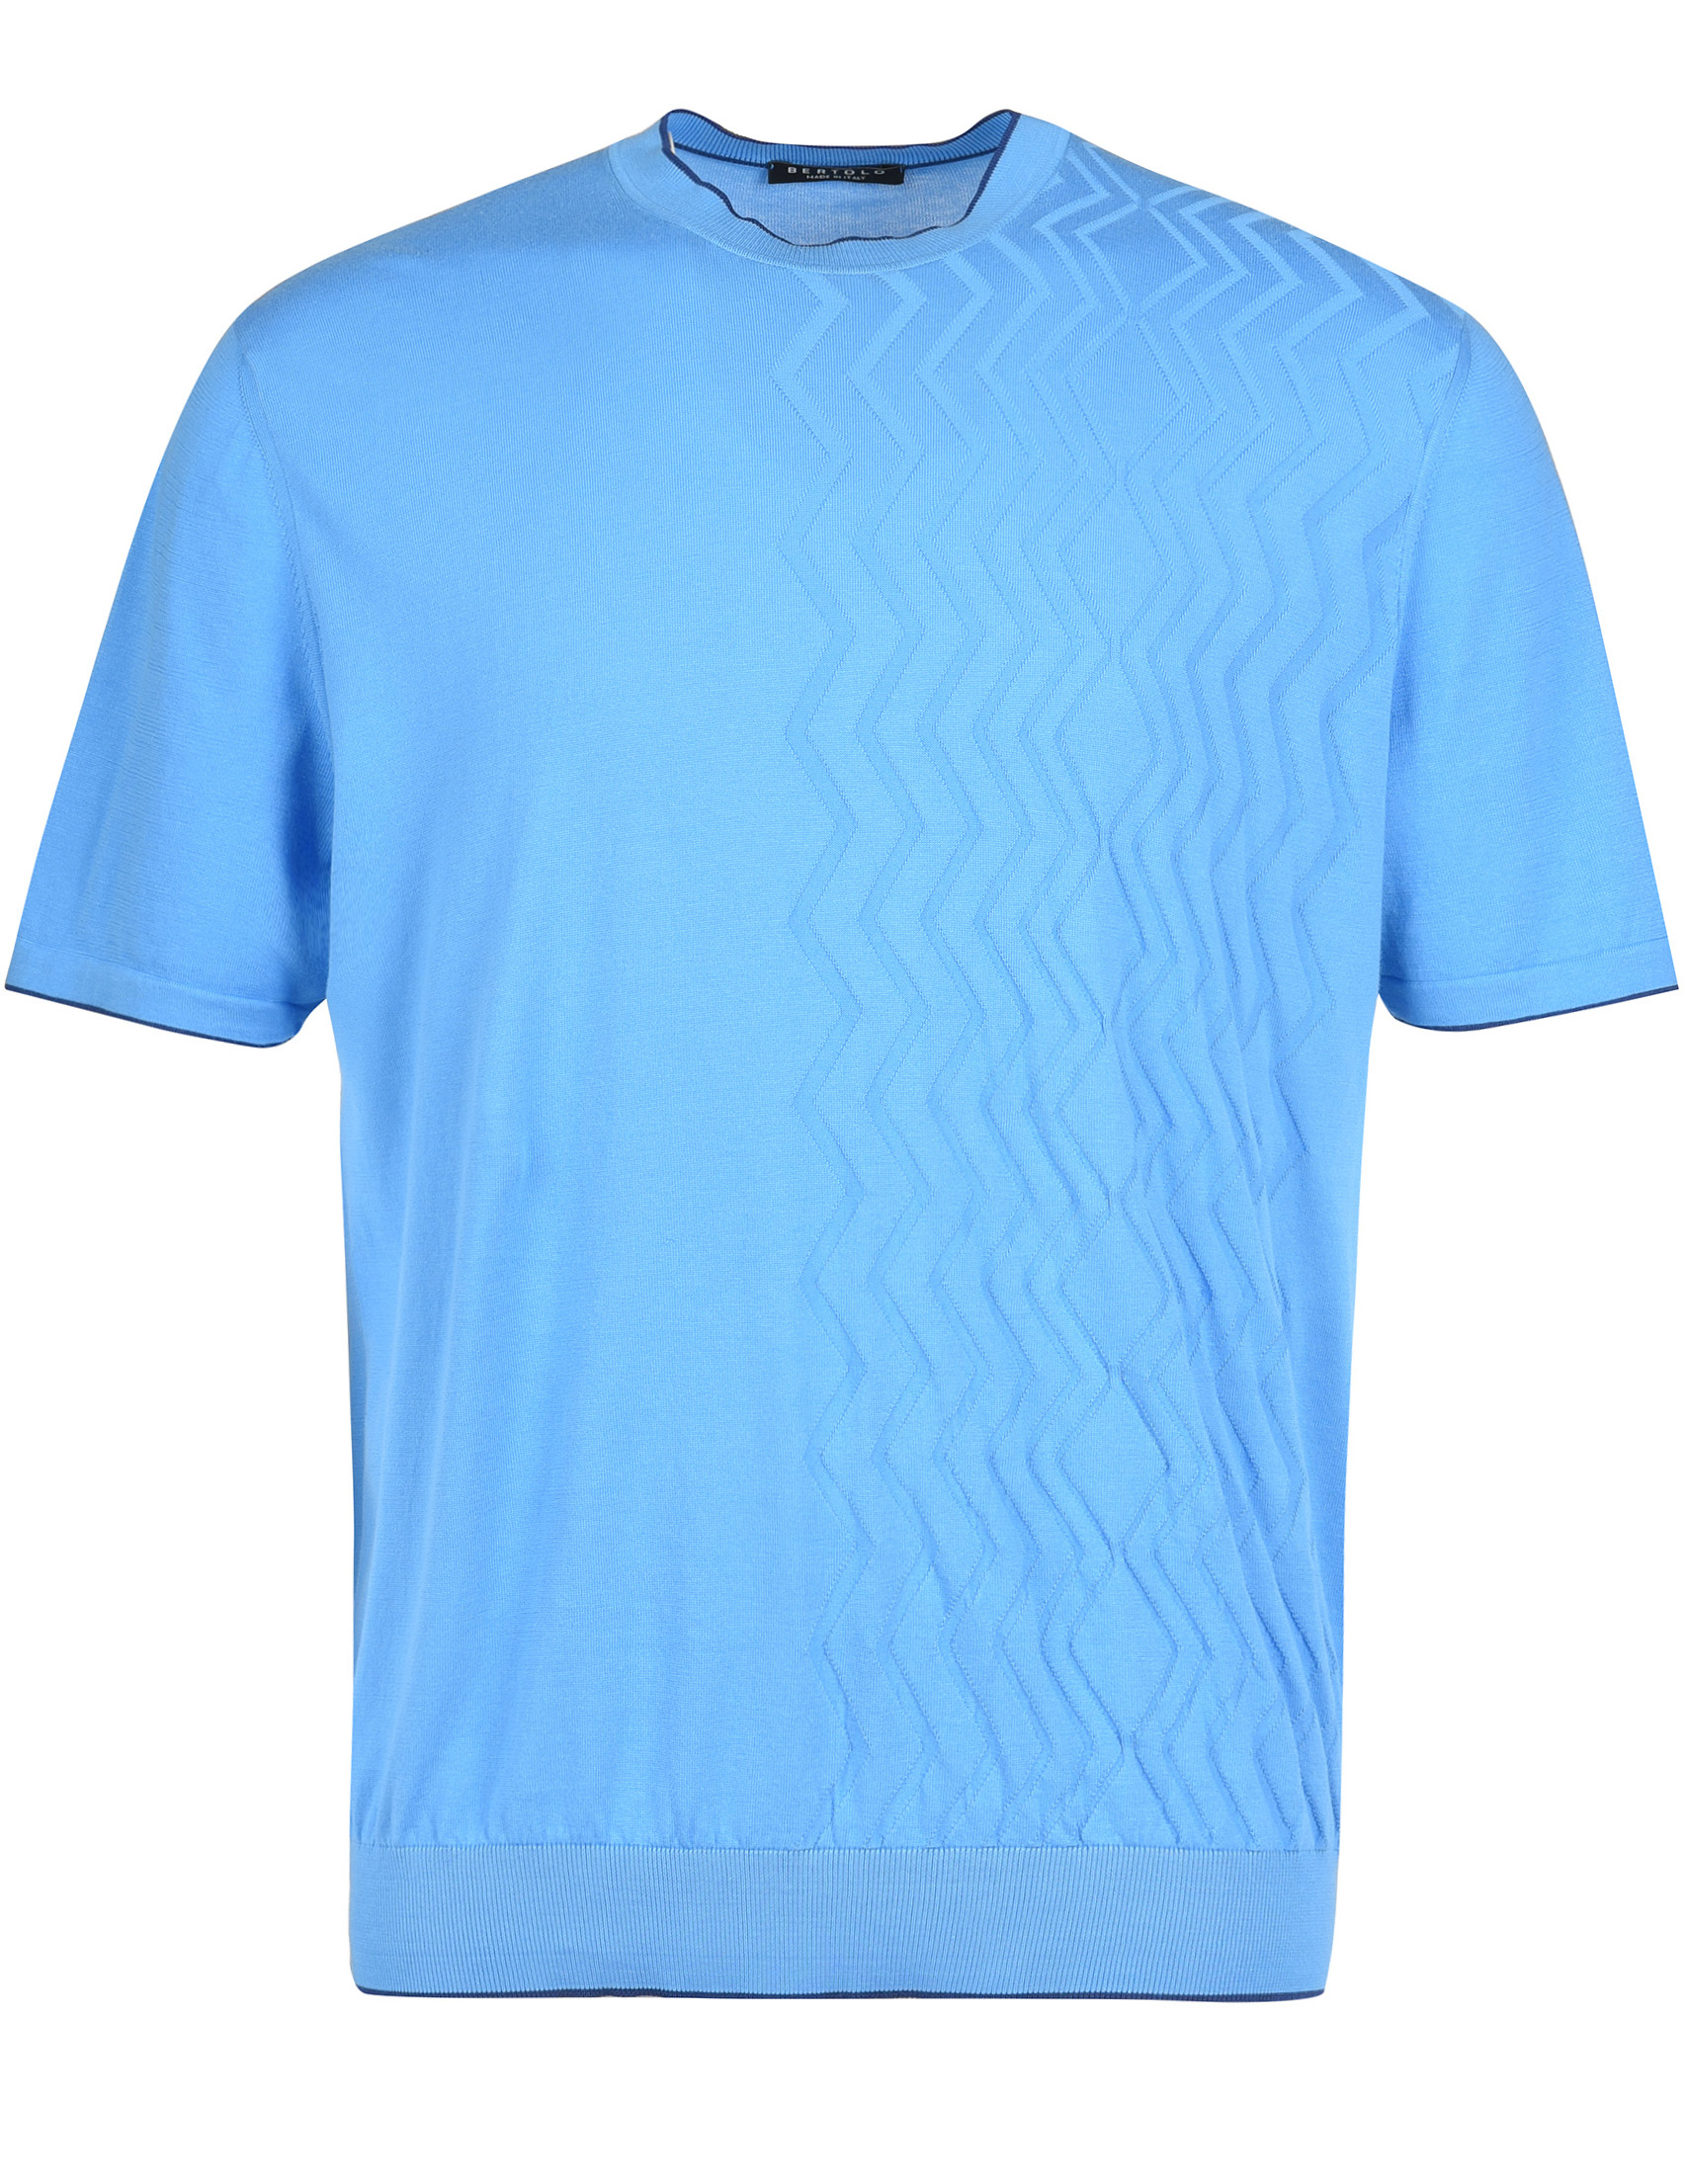 Мужская футболка BERTOLO 901673-84-1258_blue